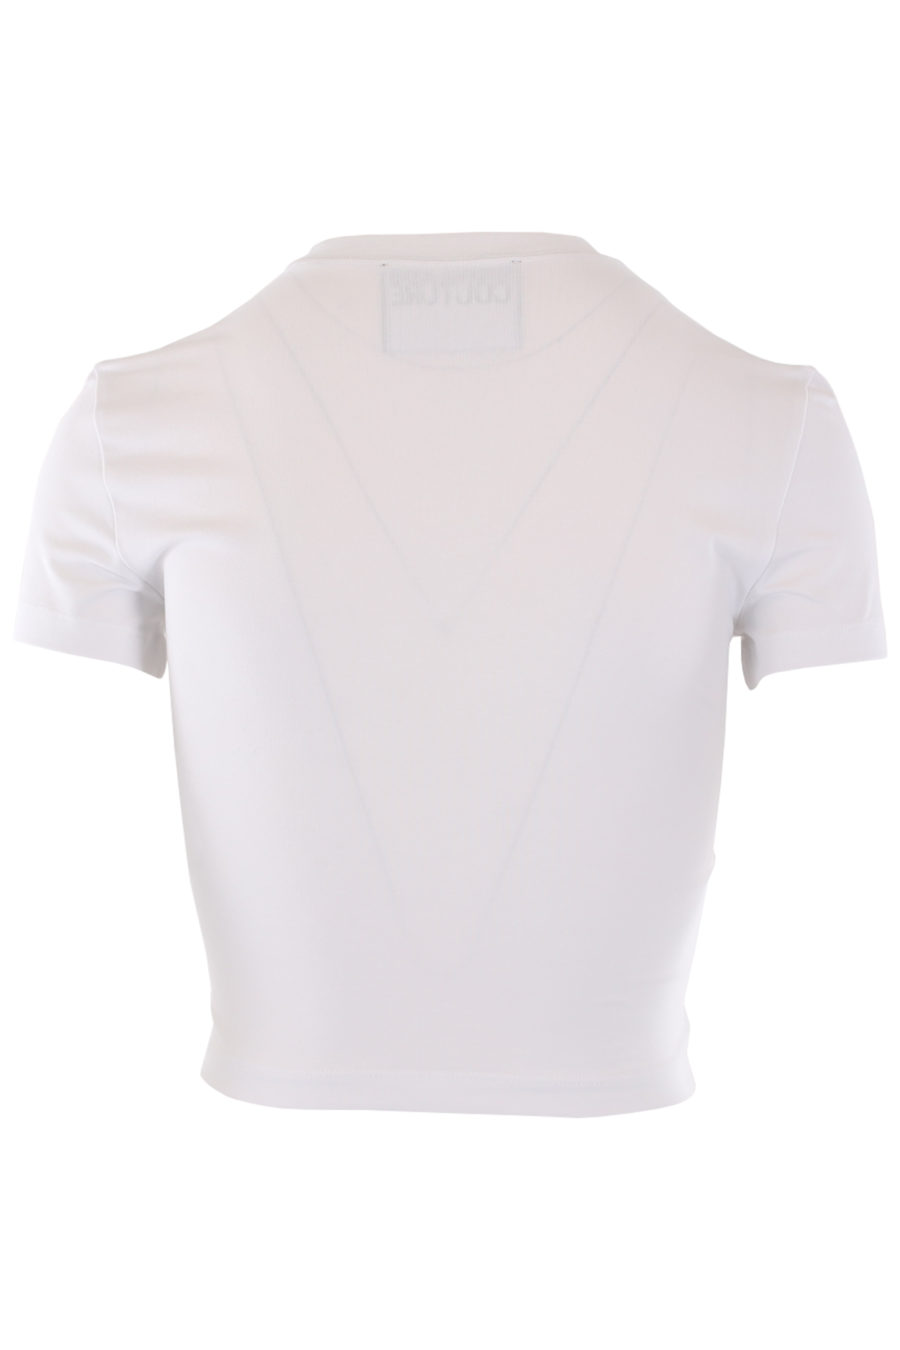 Camiseta blanca con logo morado tornasol - IMG 0764